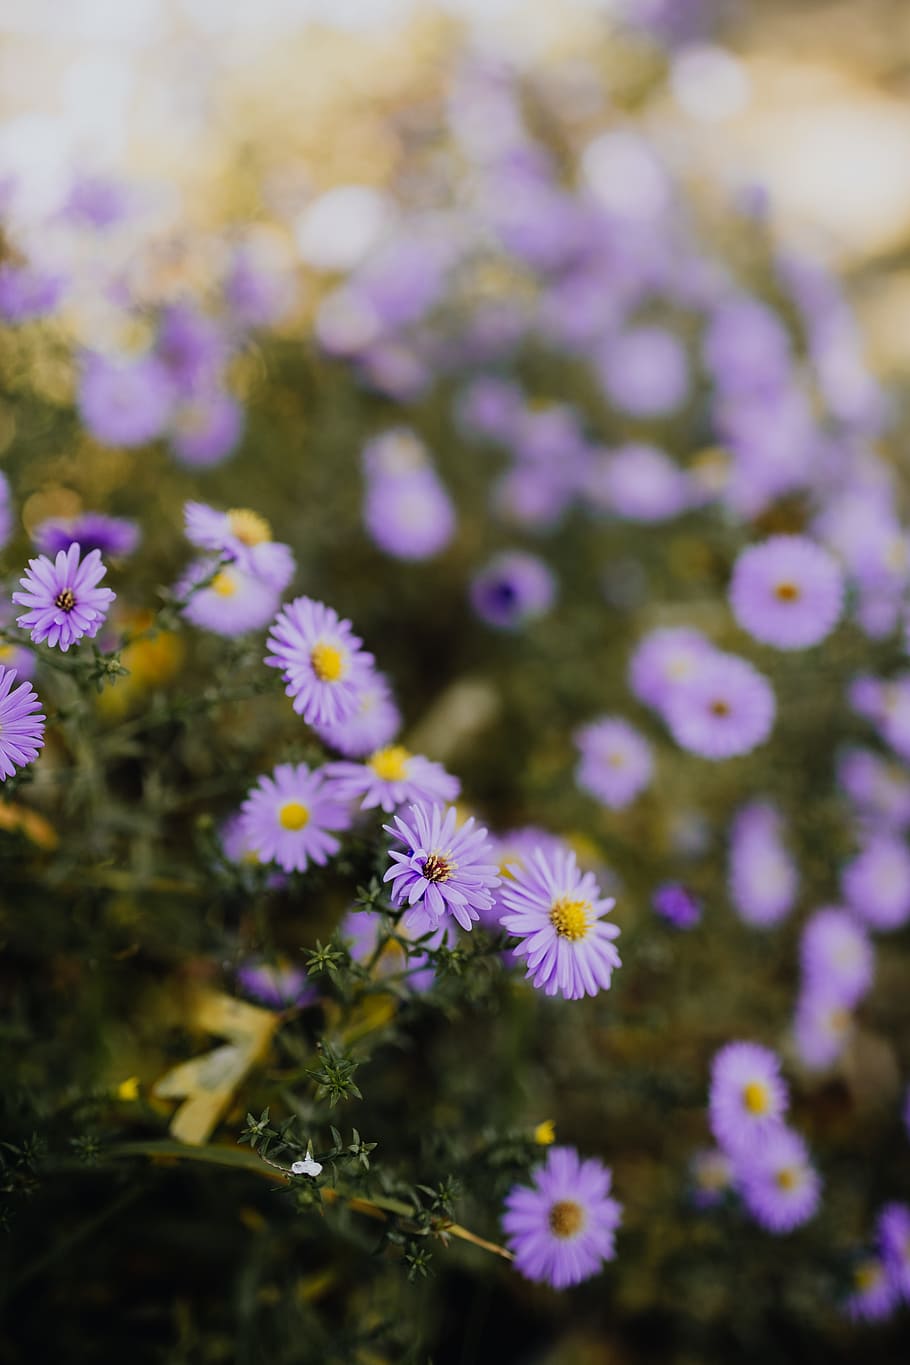 kecil, ungu, bunga, taman, bunga ungu, musim gugur, tanaman berbunga, kerentanan, kerapuhan, kesegaran